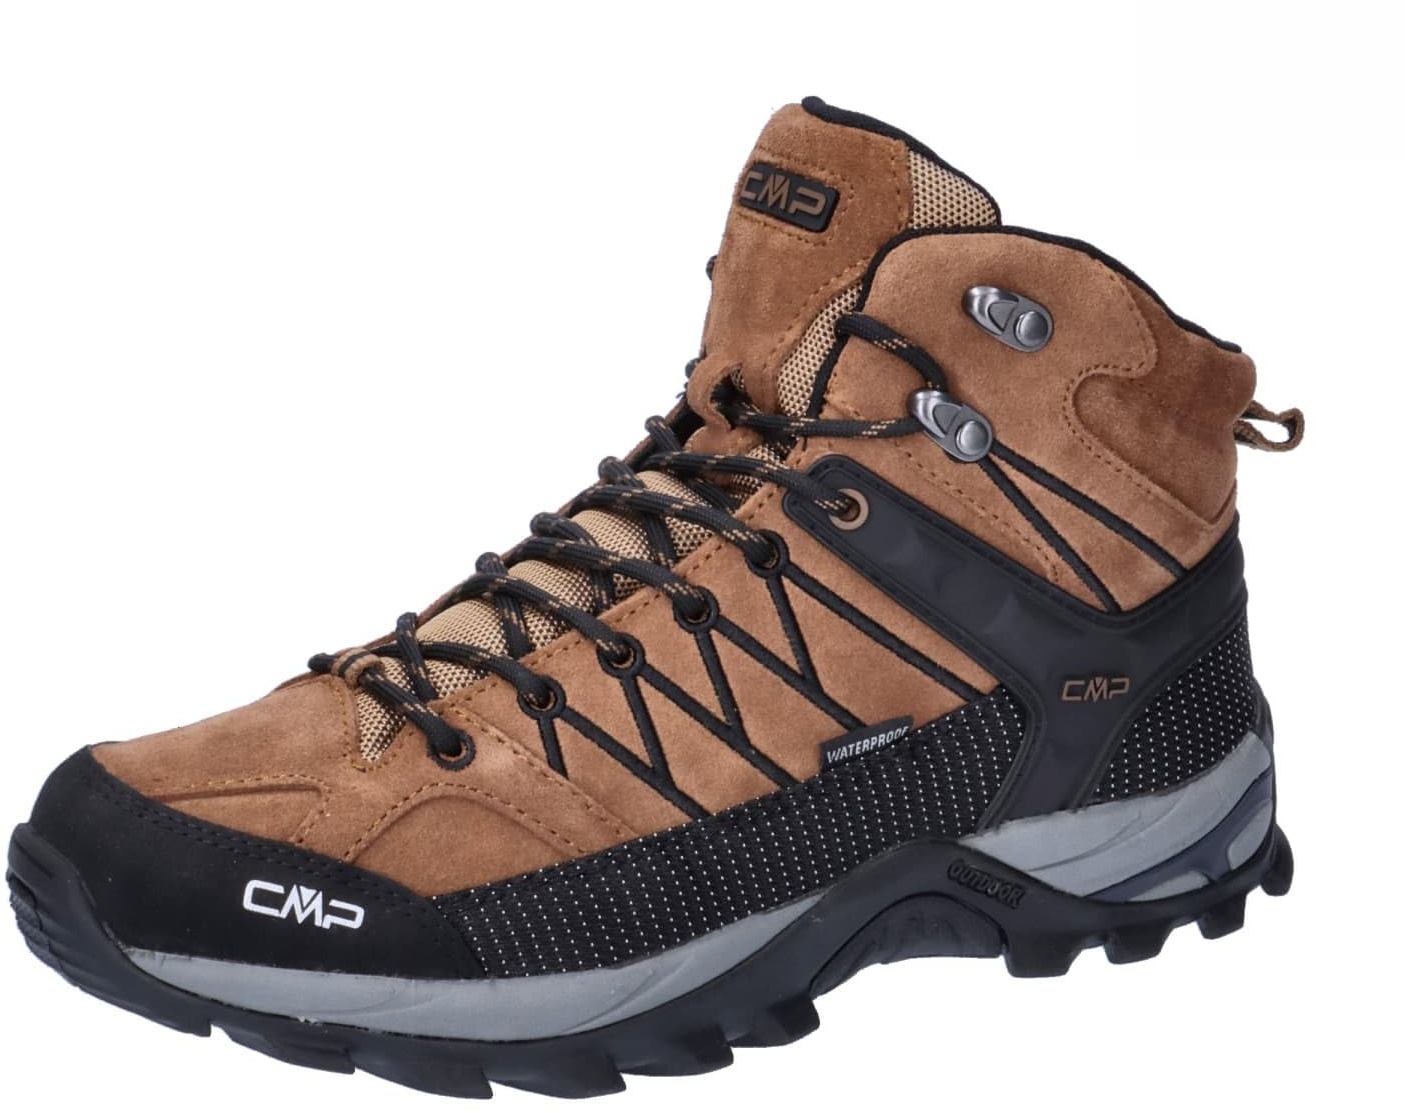 CMP Herren Rigel Mid Trekking Shoes Wp Walking Shoe, gebrannt, 46 EU